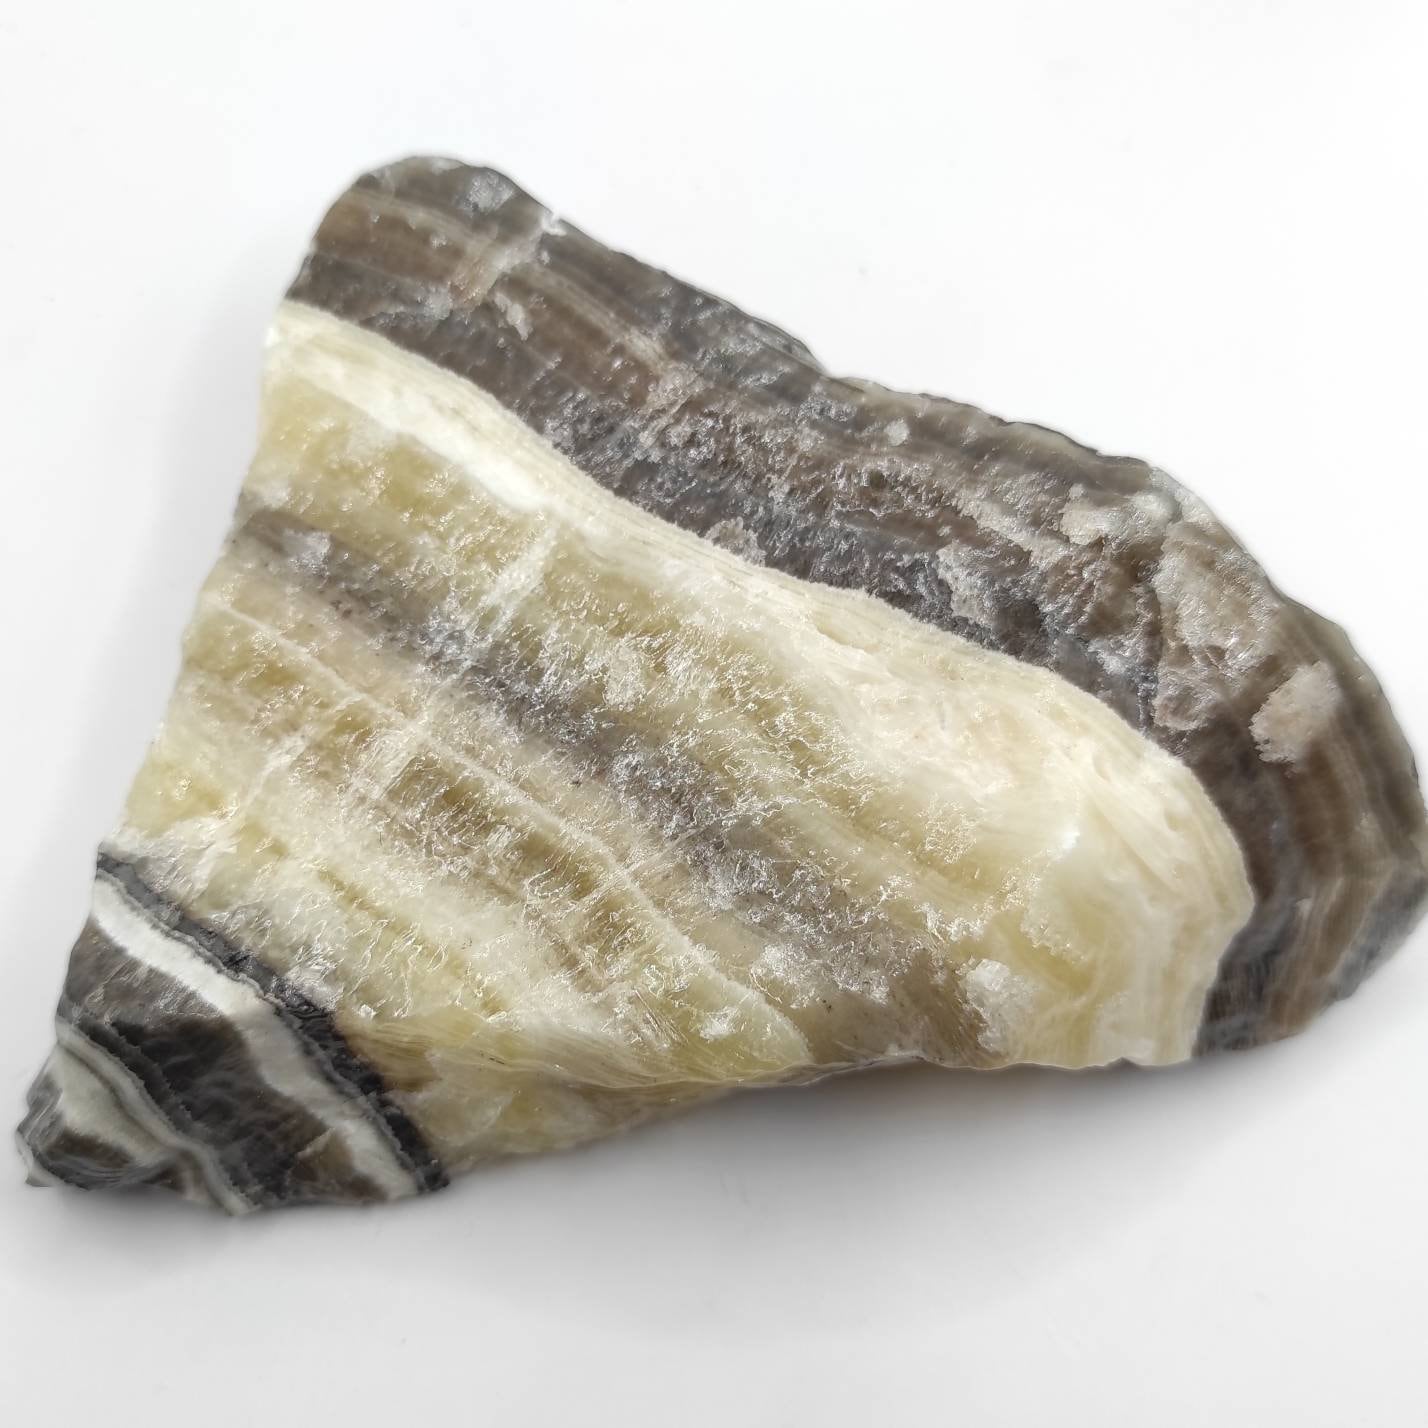 528g Zebra Calcite Stone Rough Zebra Calcite Crystal Specimen Raw Minerals Yellow and Brown Calcite Chihuahua Mexico Calcite Rock Natural